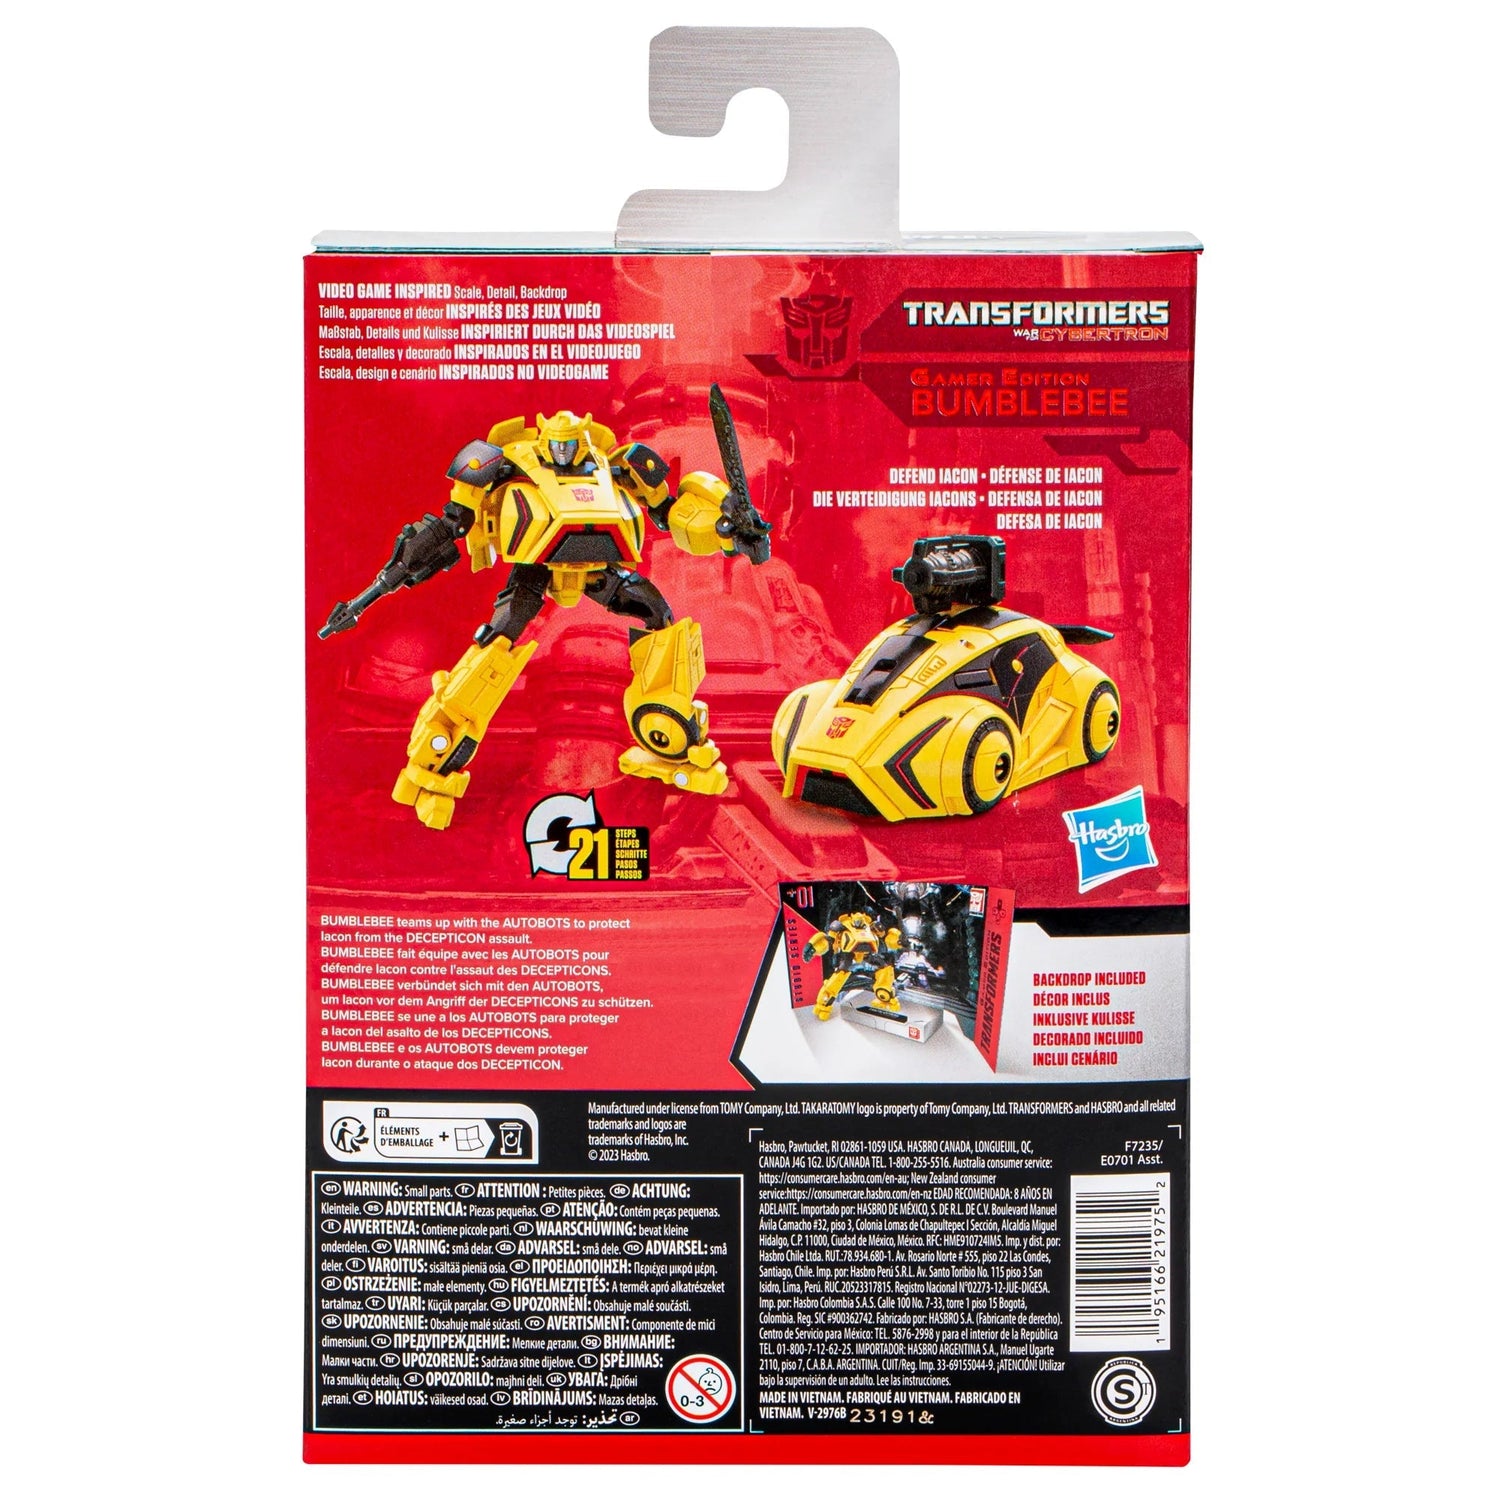 Transformers Studio Series Deluxe 01 Gamer Edition Bumblebee Hasbro